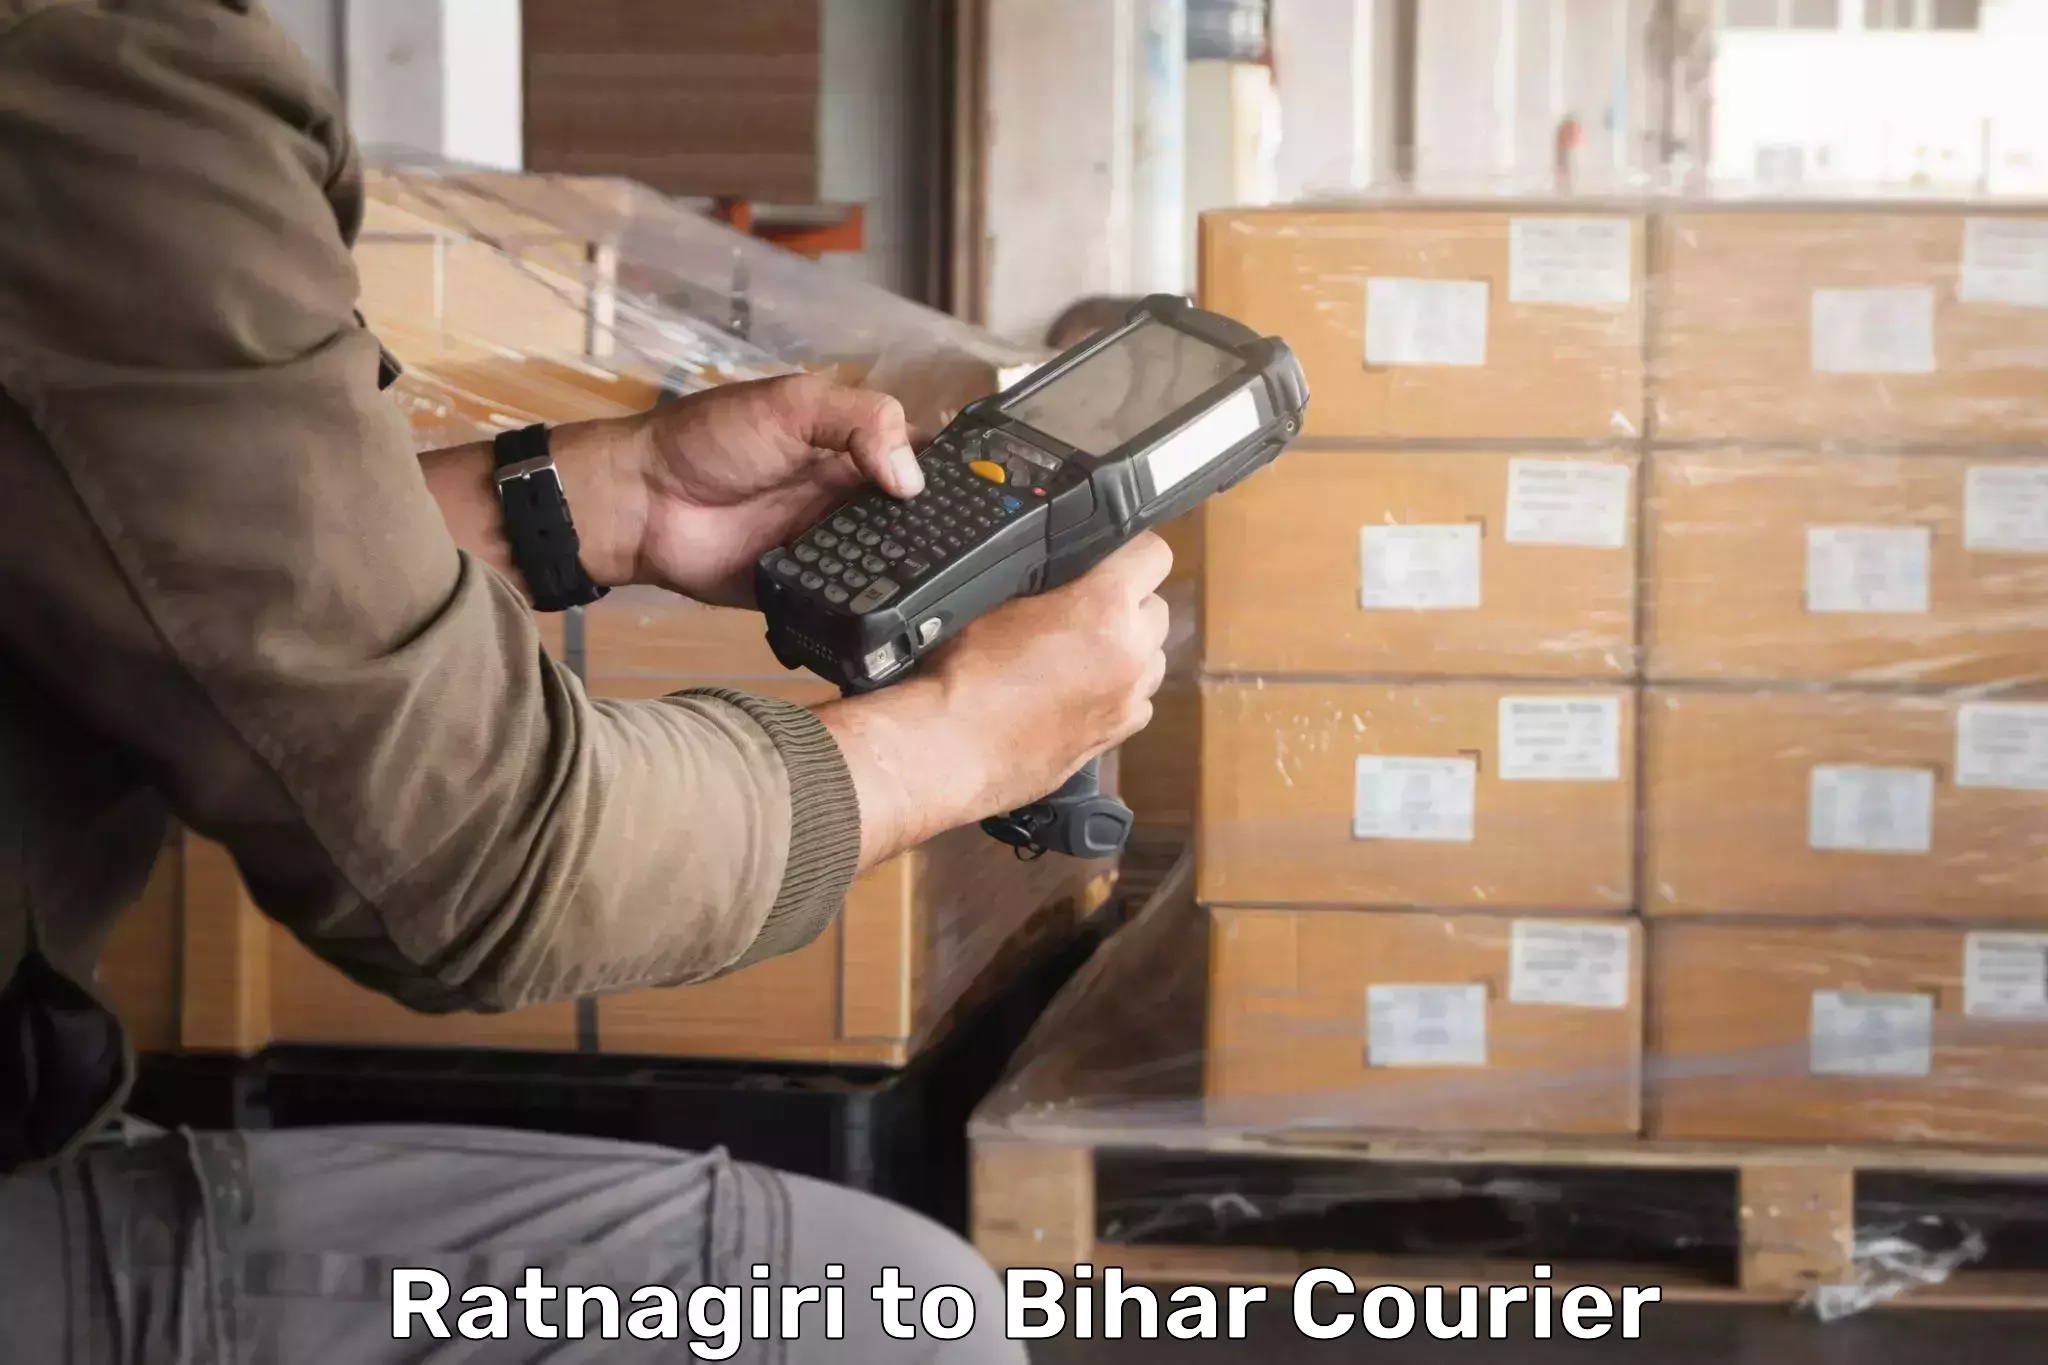 Courier service comparison Ratnagiri to Palasi Araria